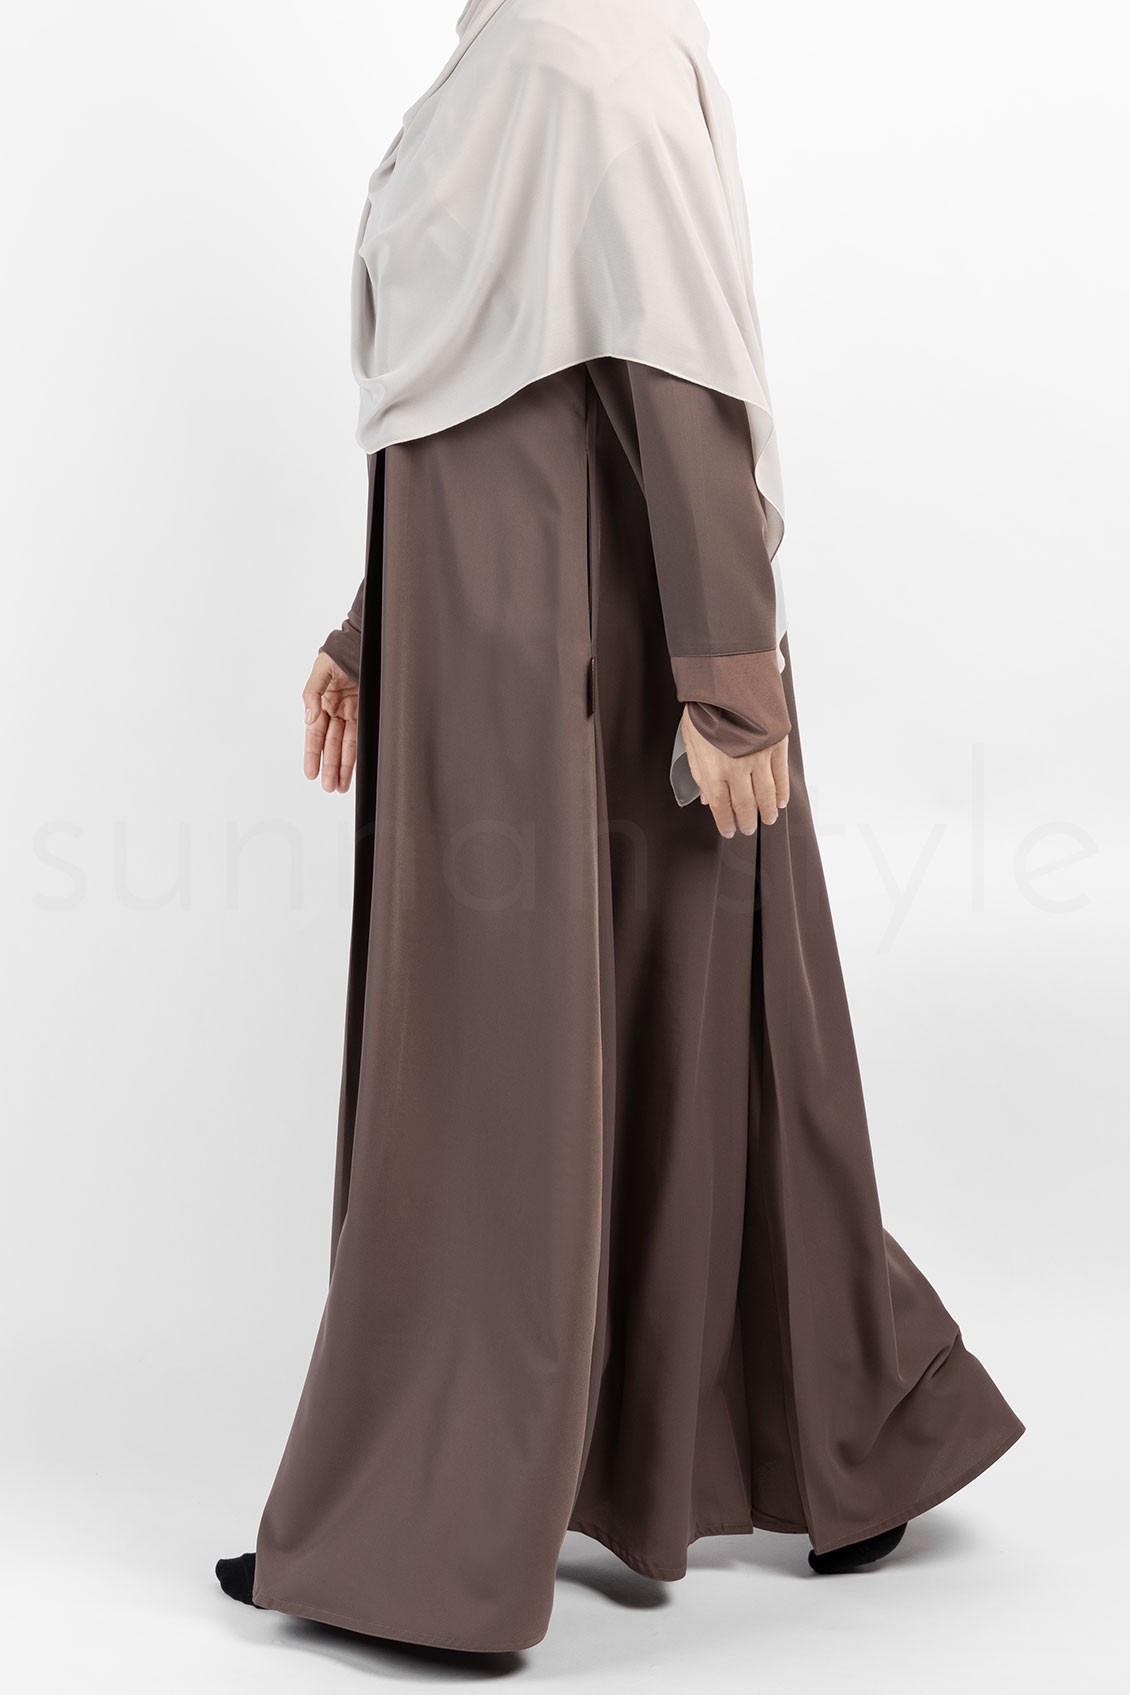 Sunnah Style Belle Umbrella Abaya Mink